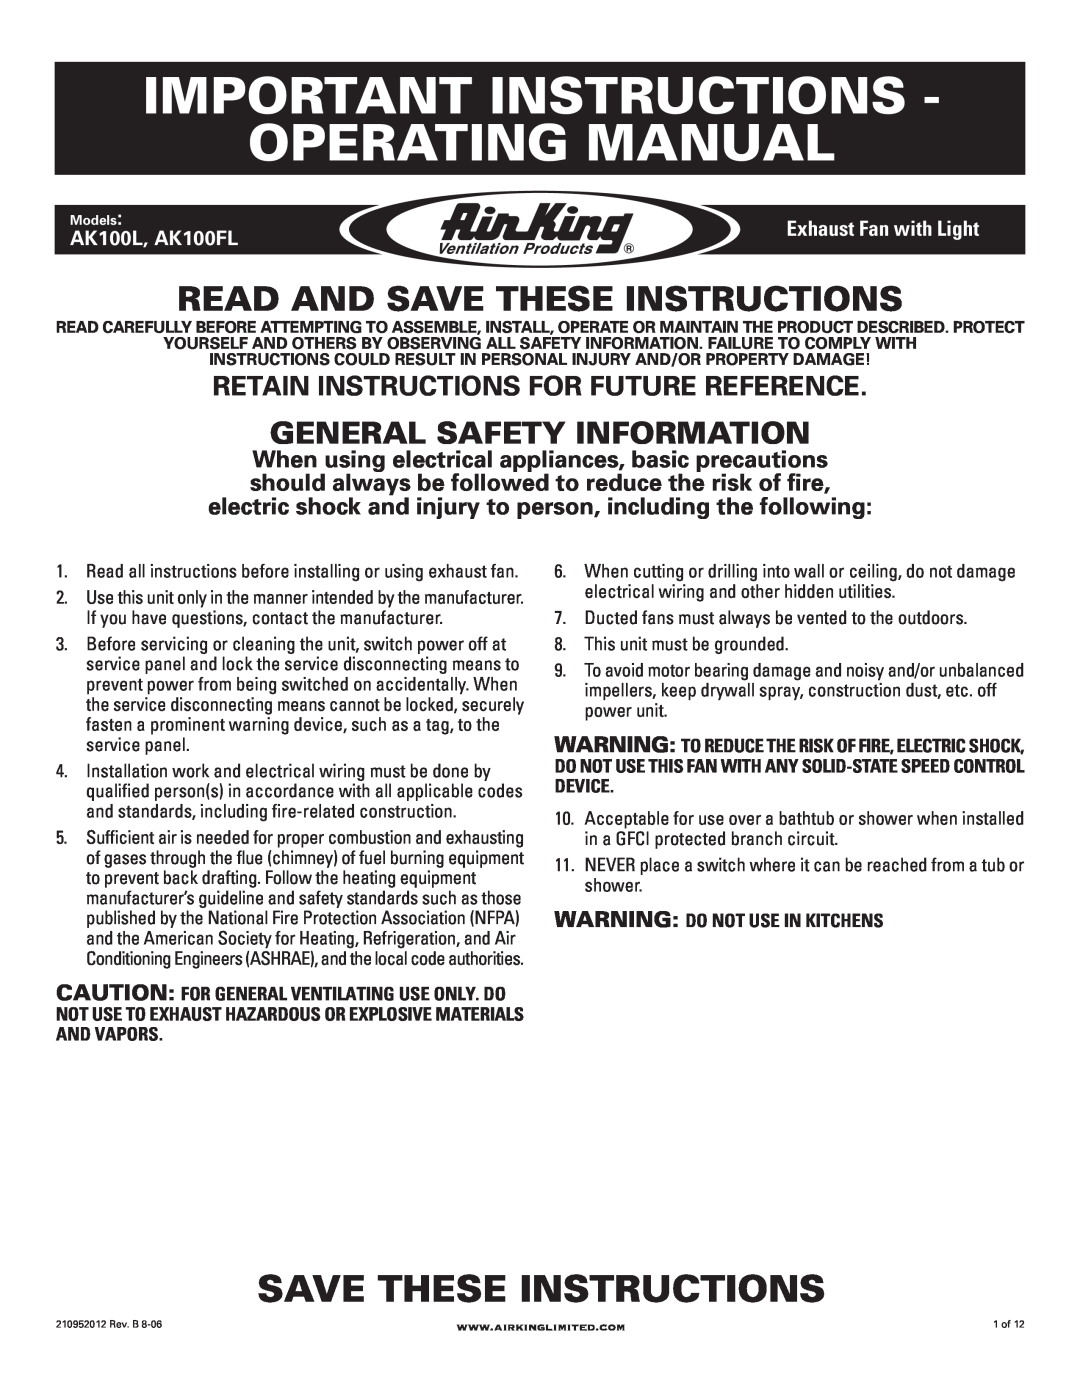 Air King manual Important Instructions Operating Manual, Read And Save These Instructions, AK100L, AK100FL 